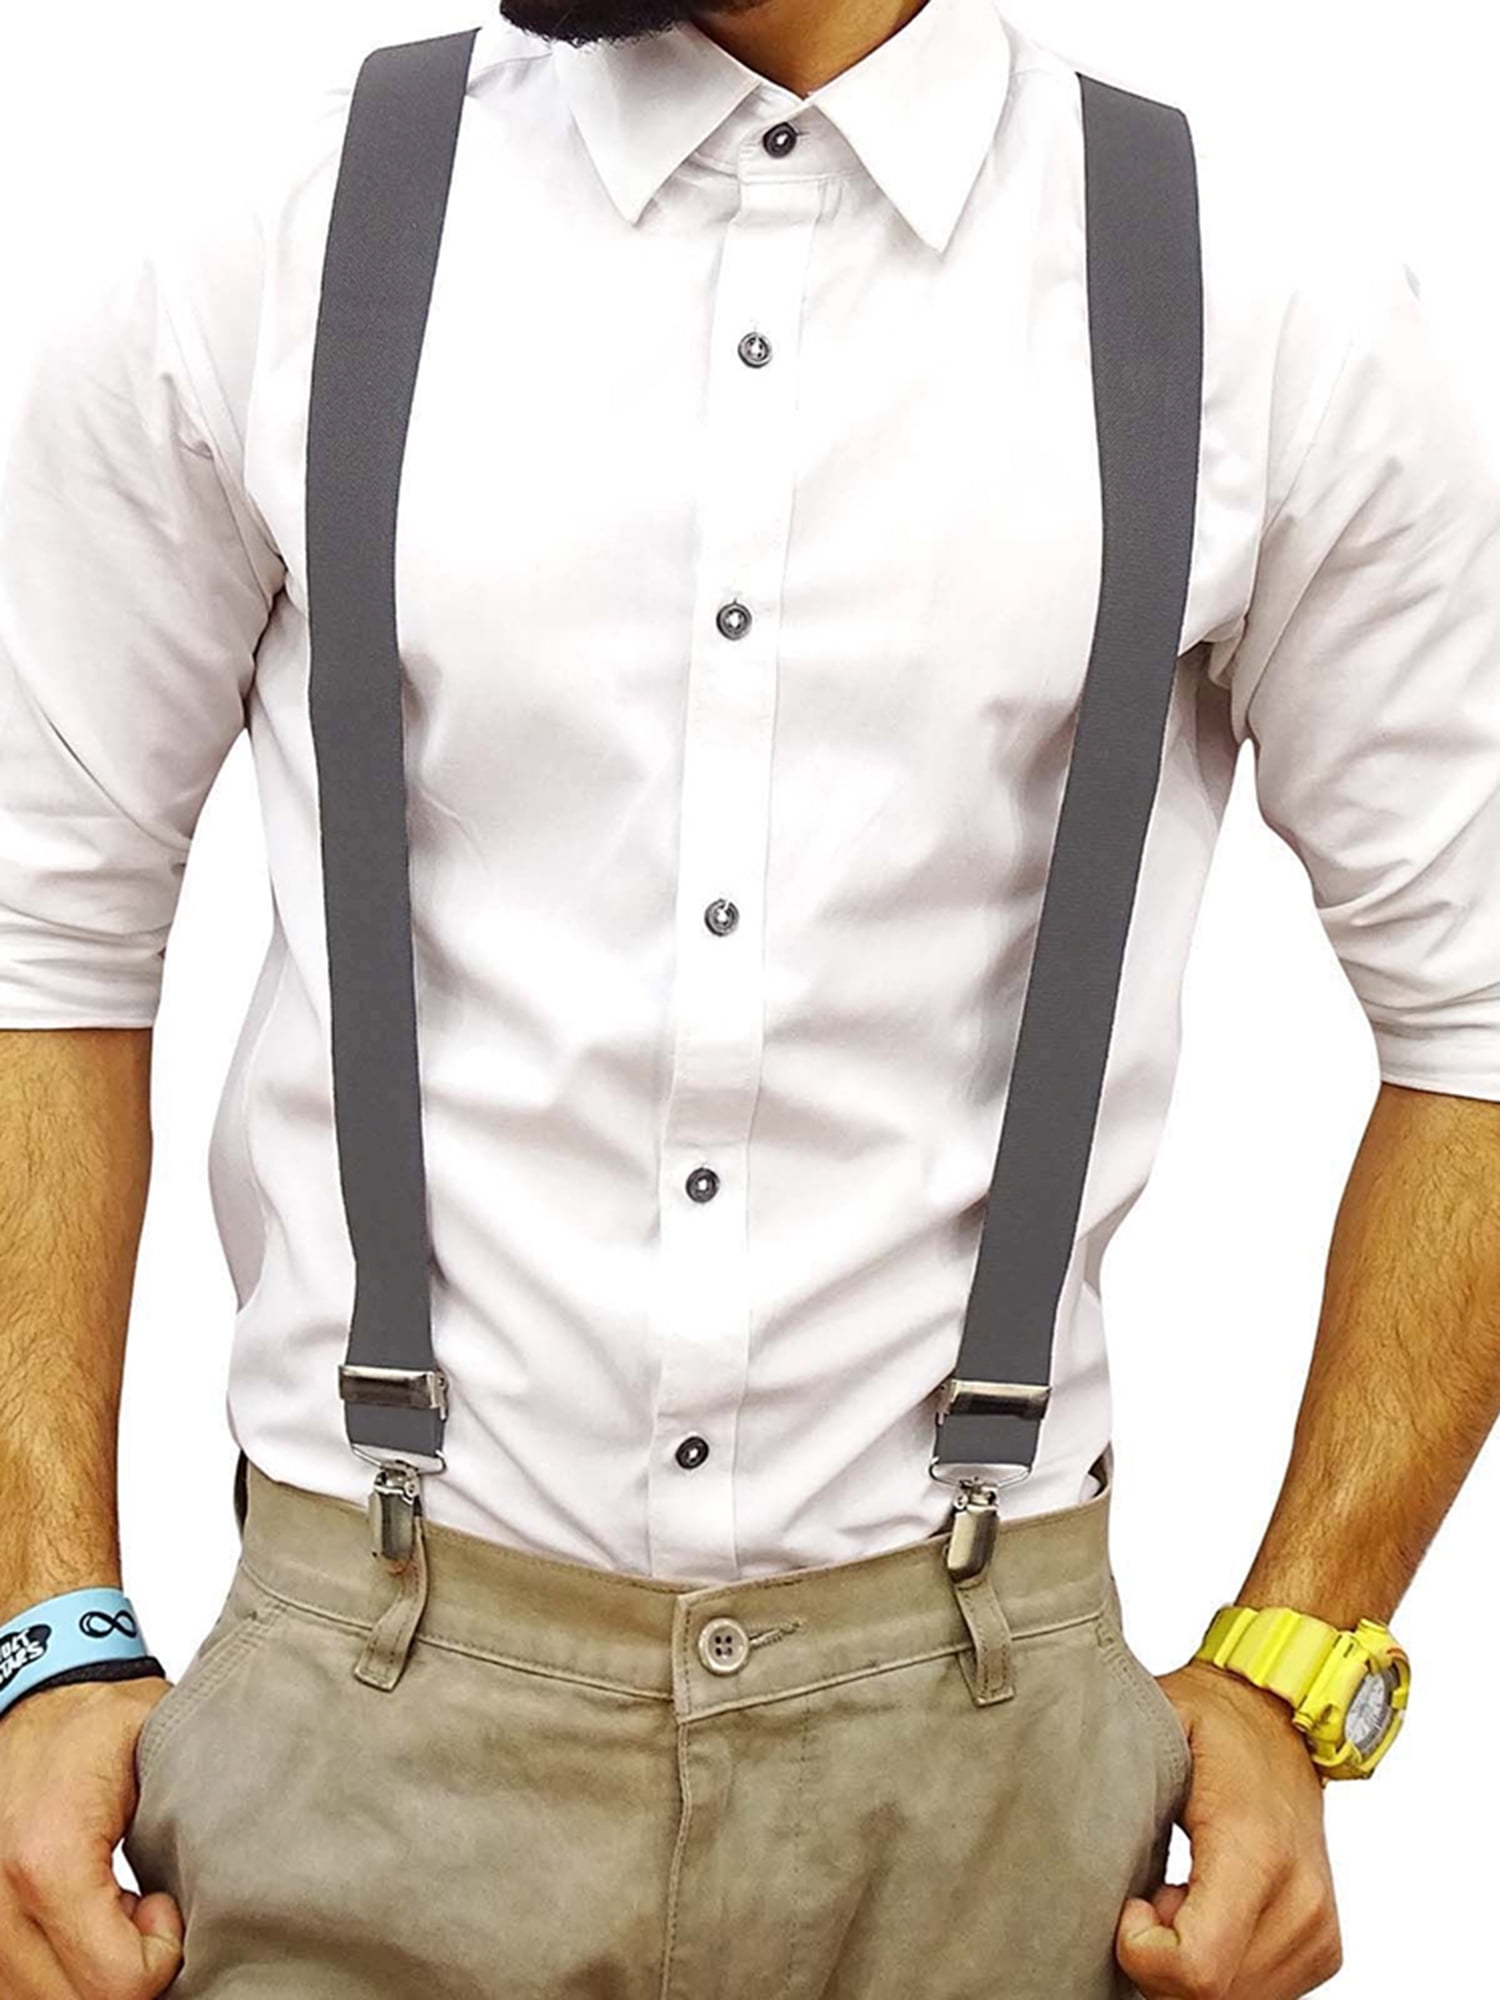 Mens Unisex Clip-on Braces Elastic Suspender "Star" 13 Colors Y back Suspenders 